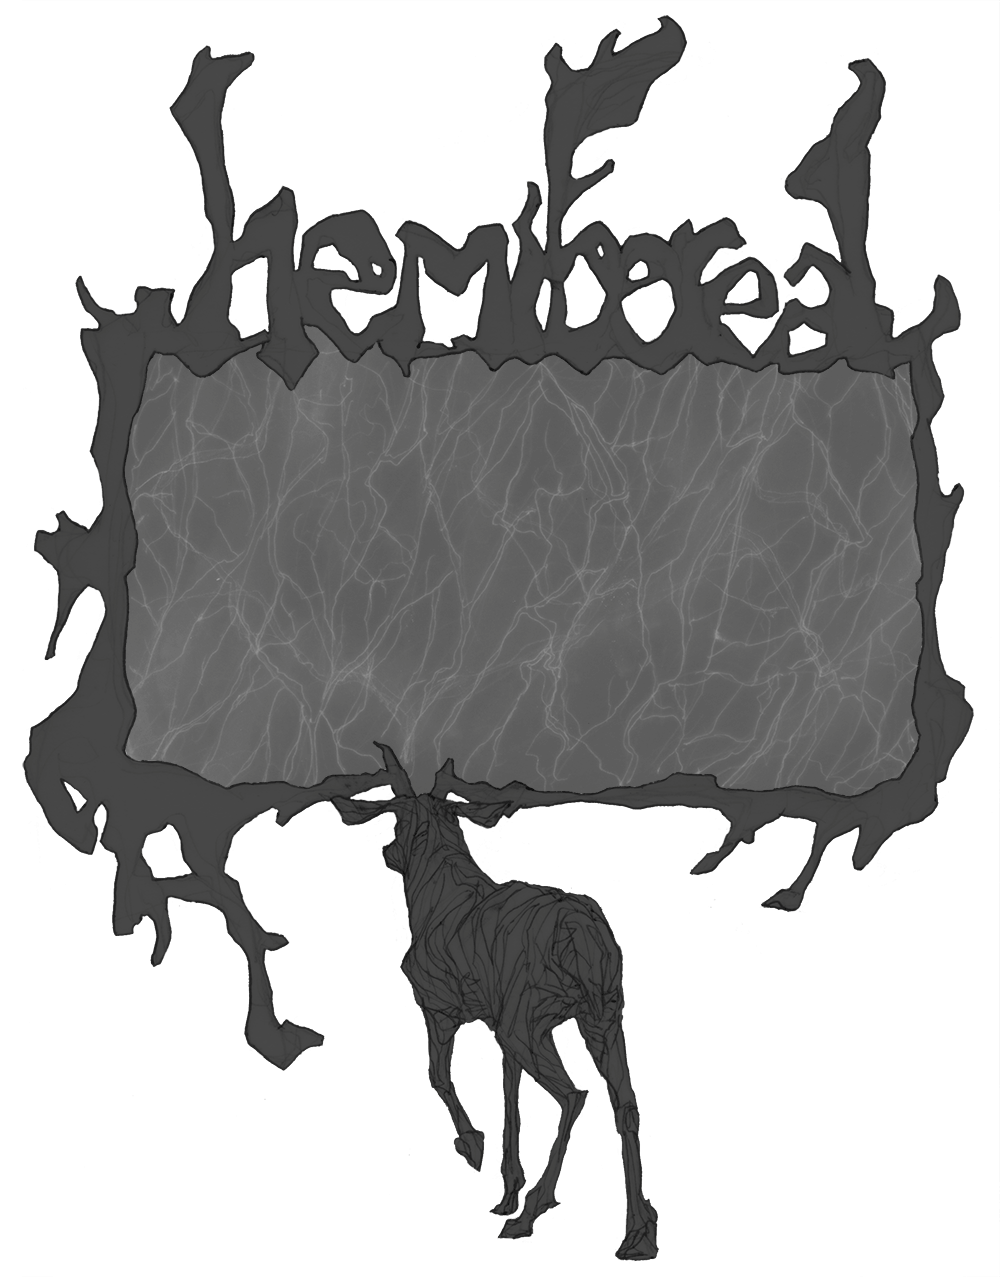 Hemiboreal